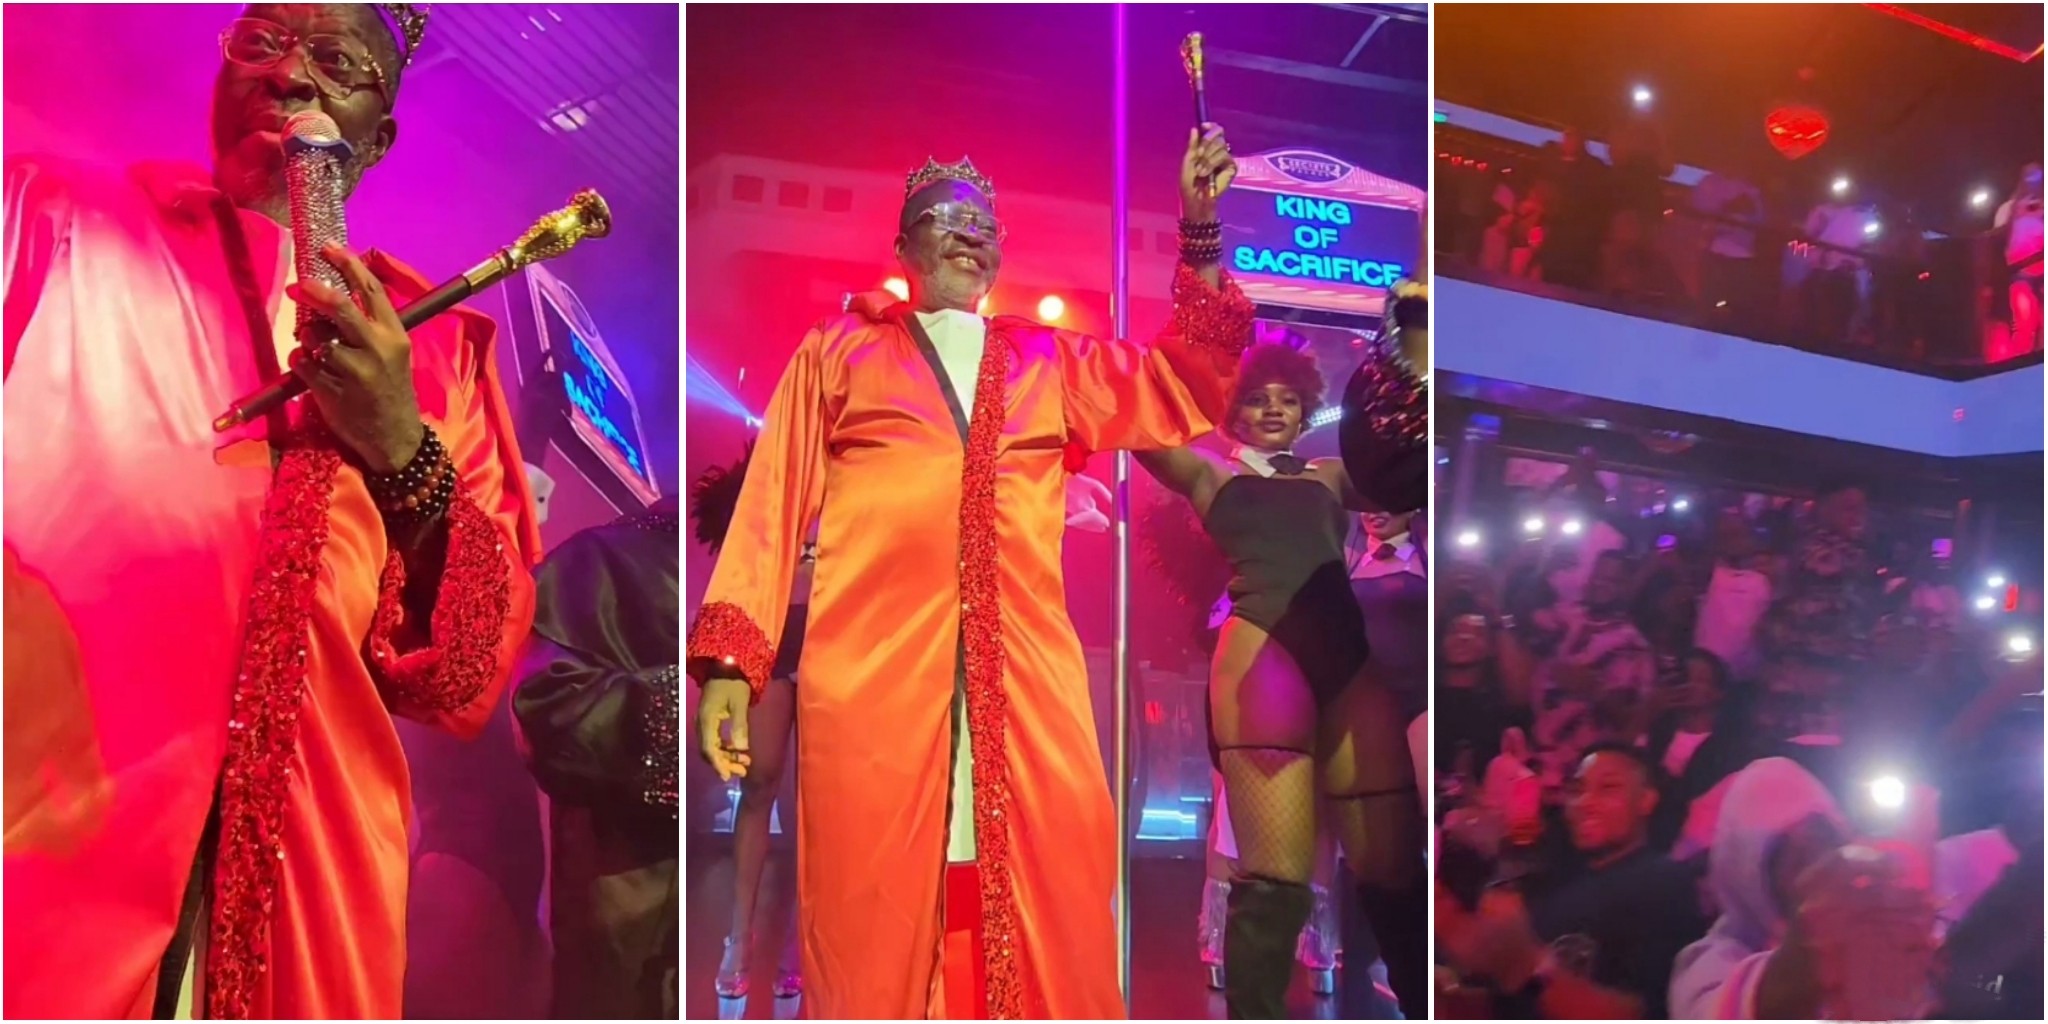 Veteran Actor Kanayo O. Kanayo’s ‘King of Sacrifice’ crowning at Lagos nightclub sparks excitement